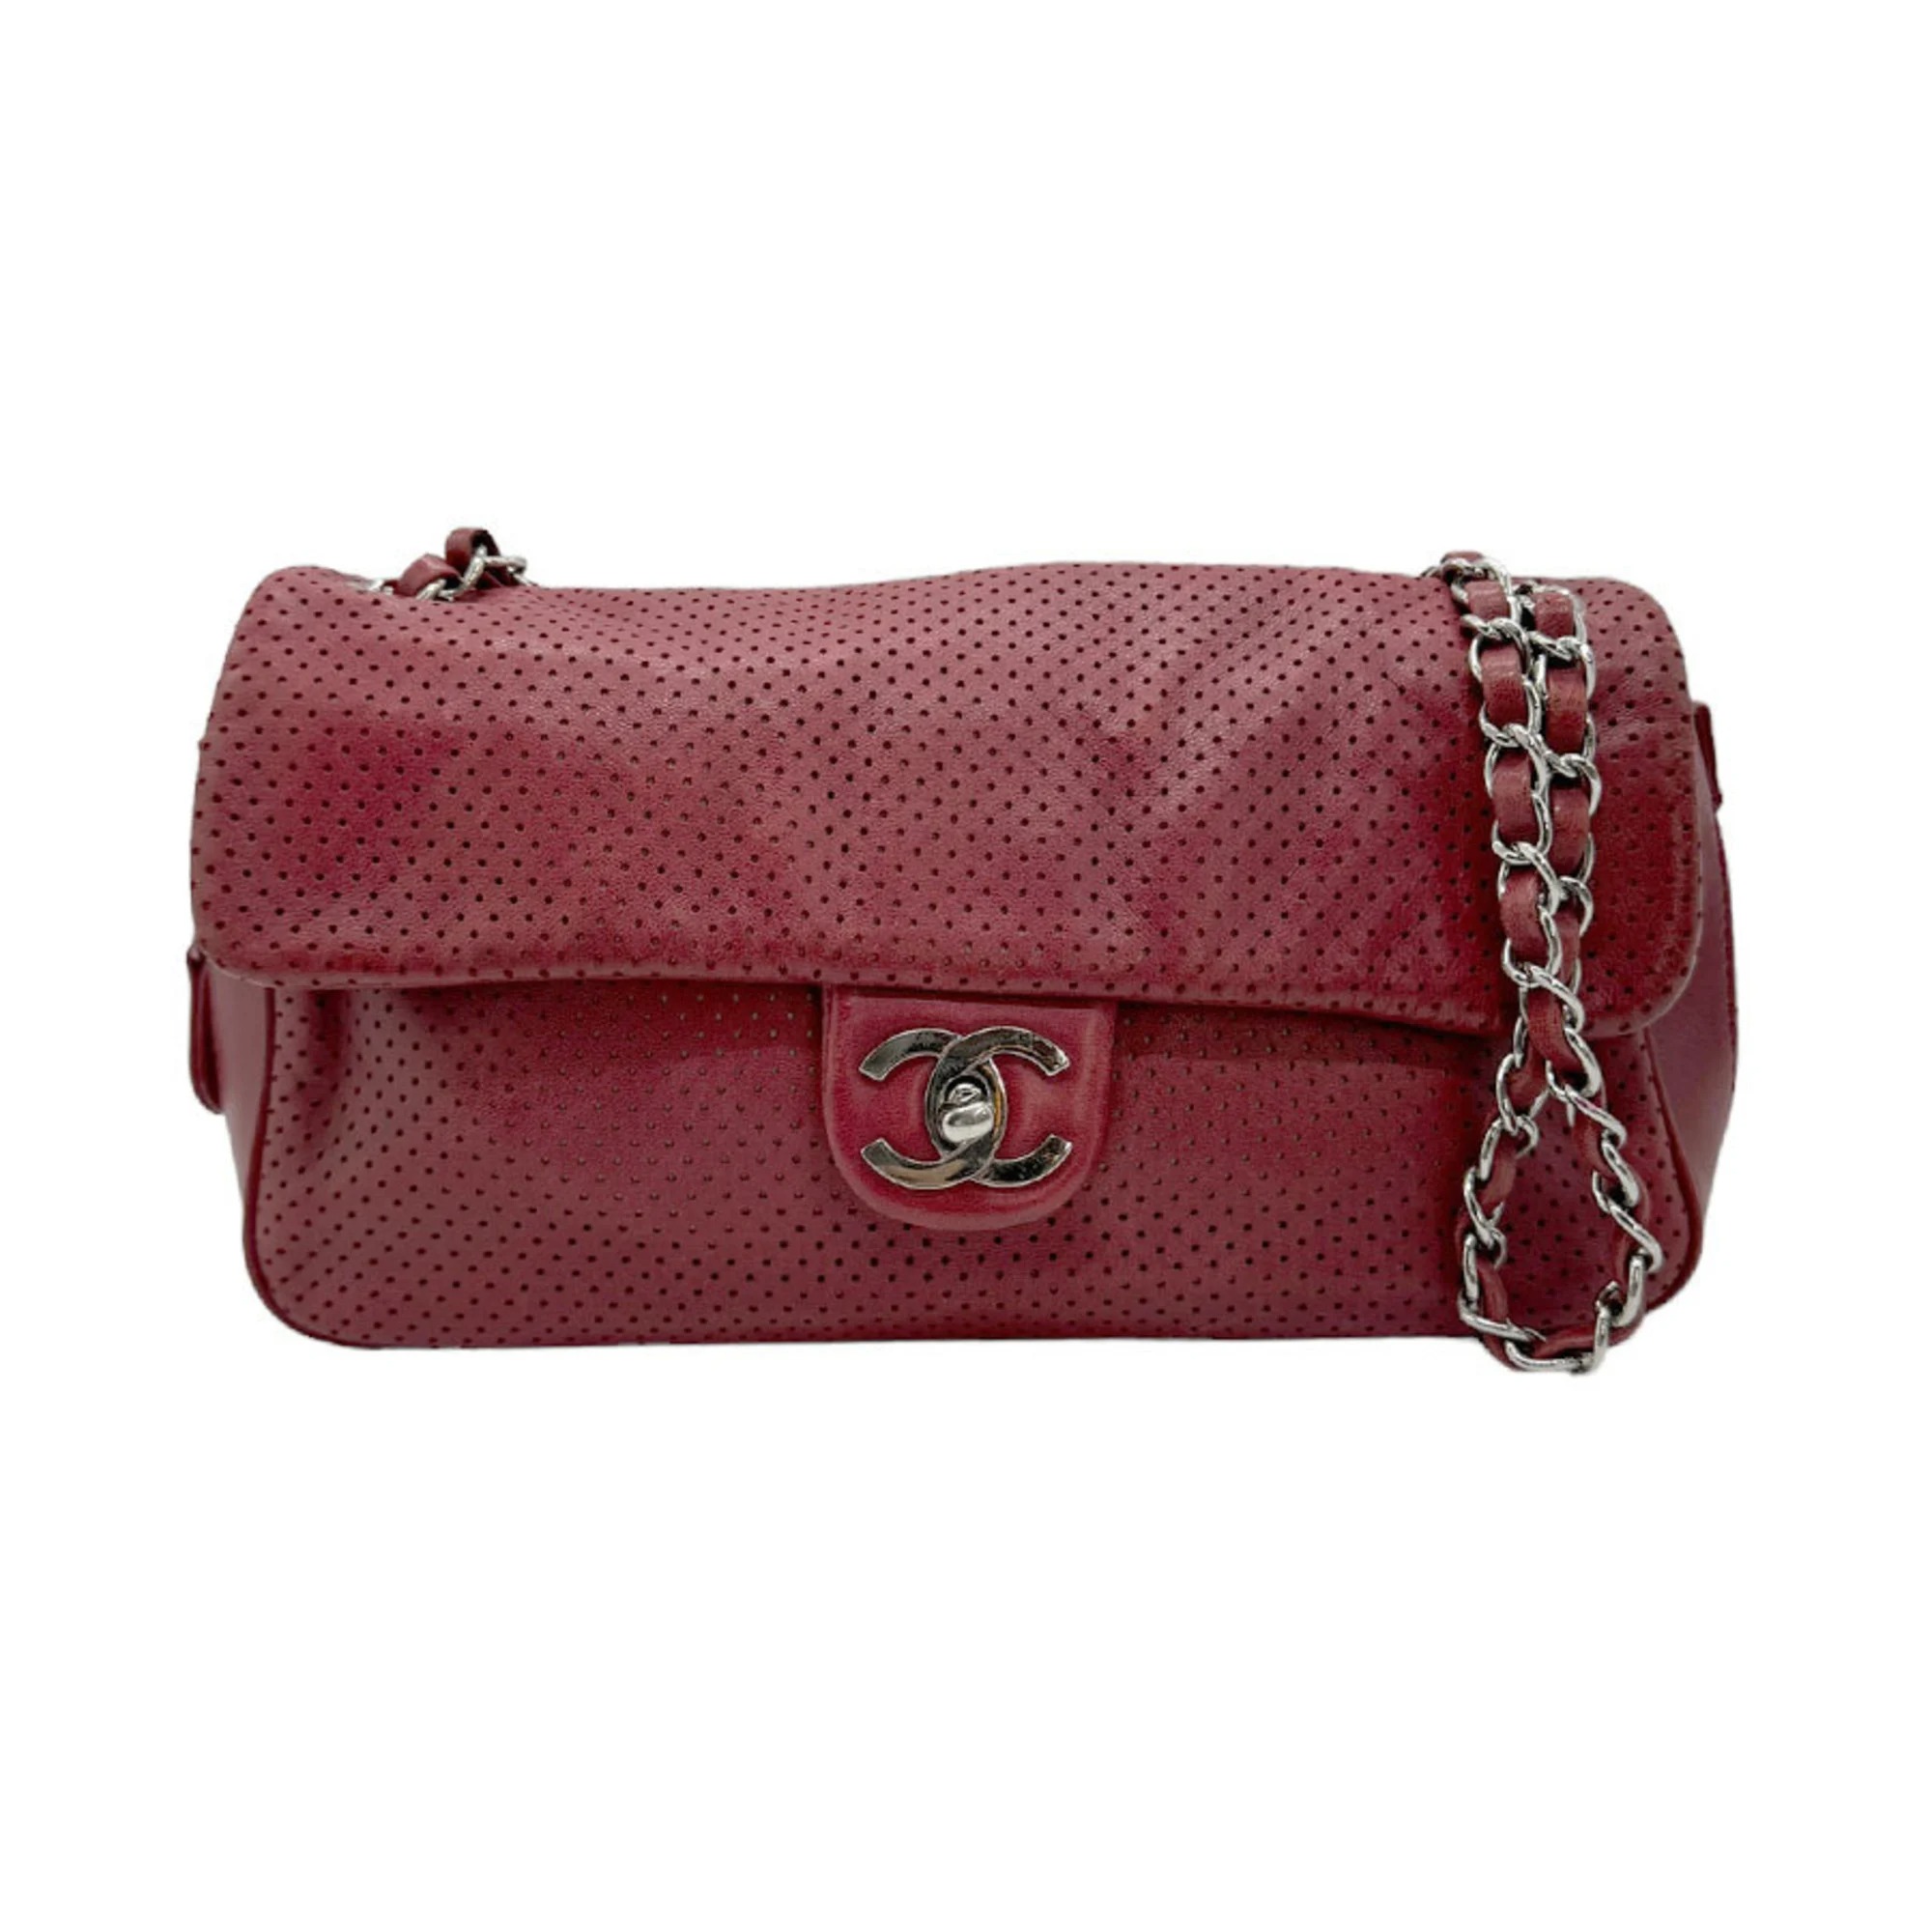 Chanel red perforated leather medium baseball spirit flap bag